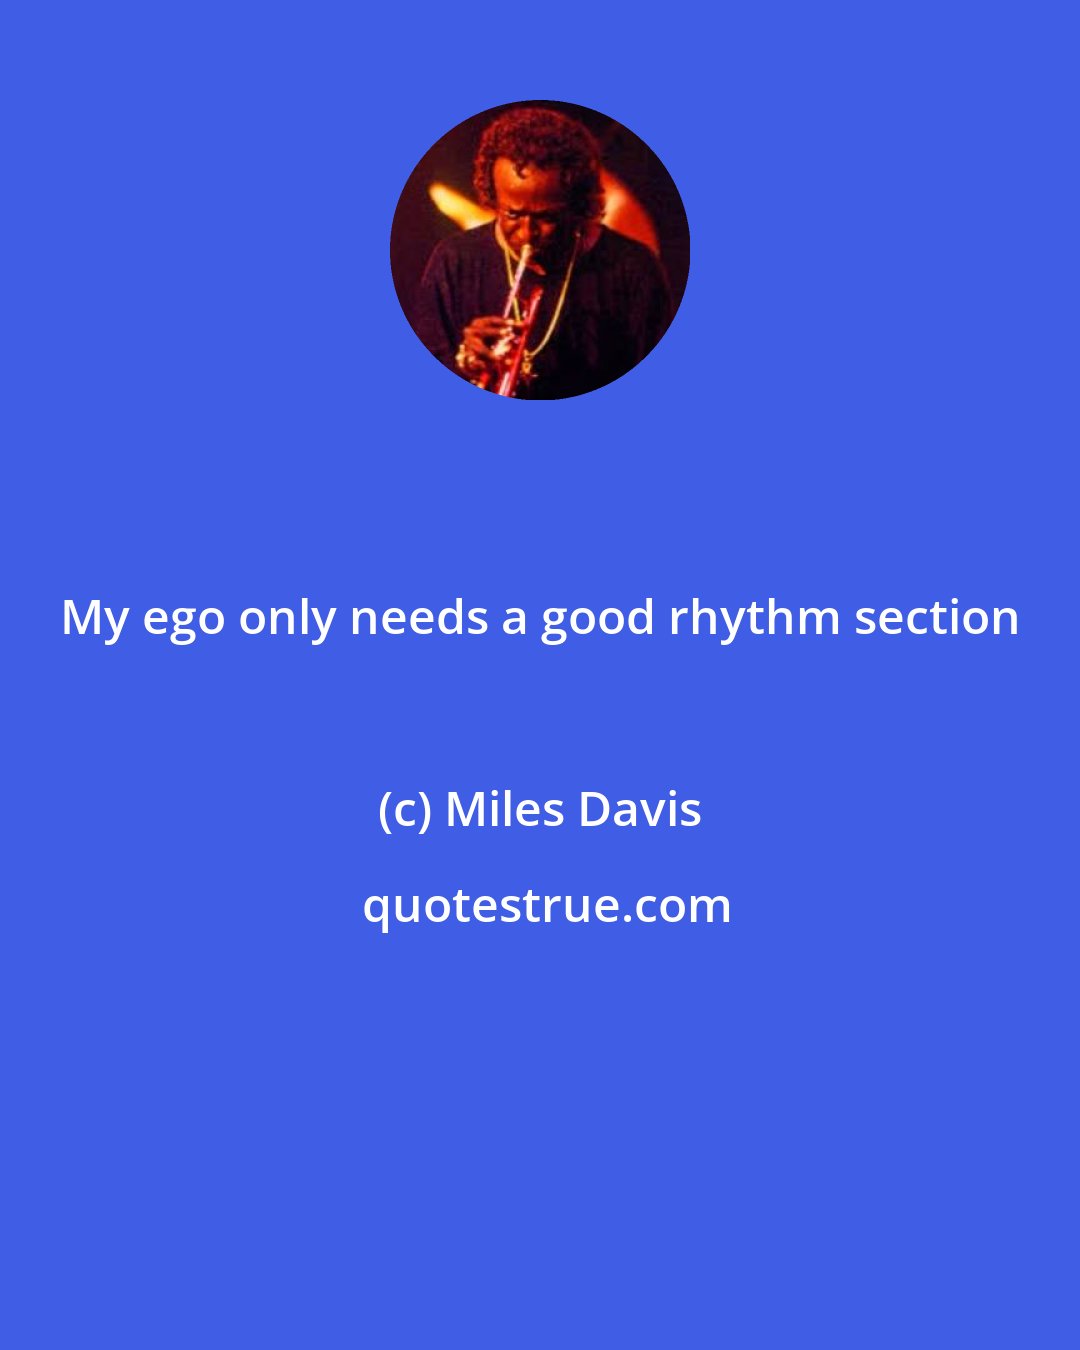 Miles Davis: My ego only needs a good rhythm section